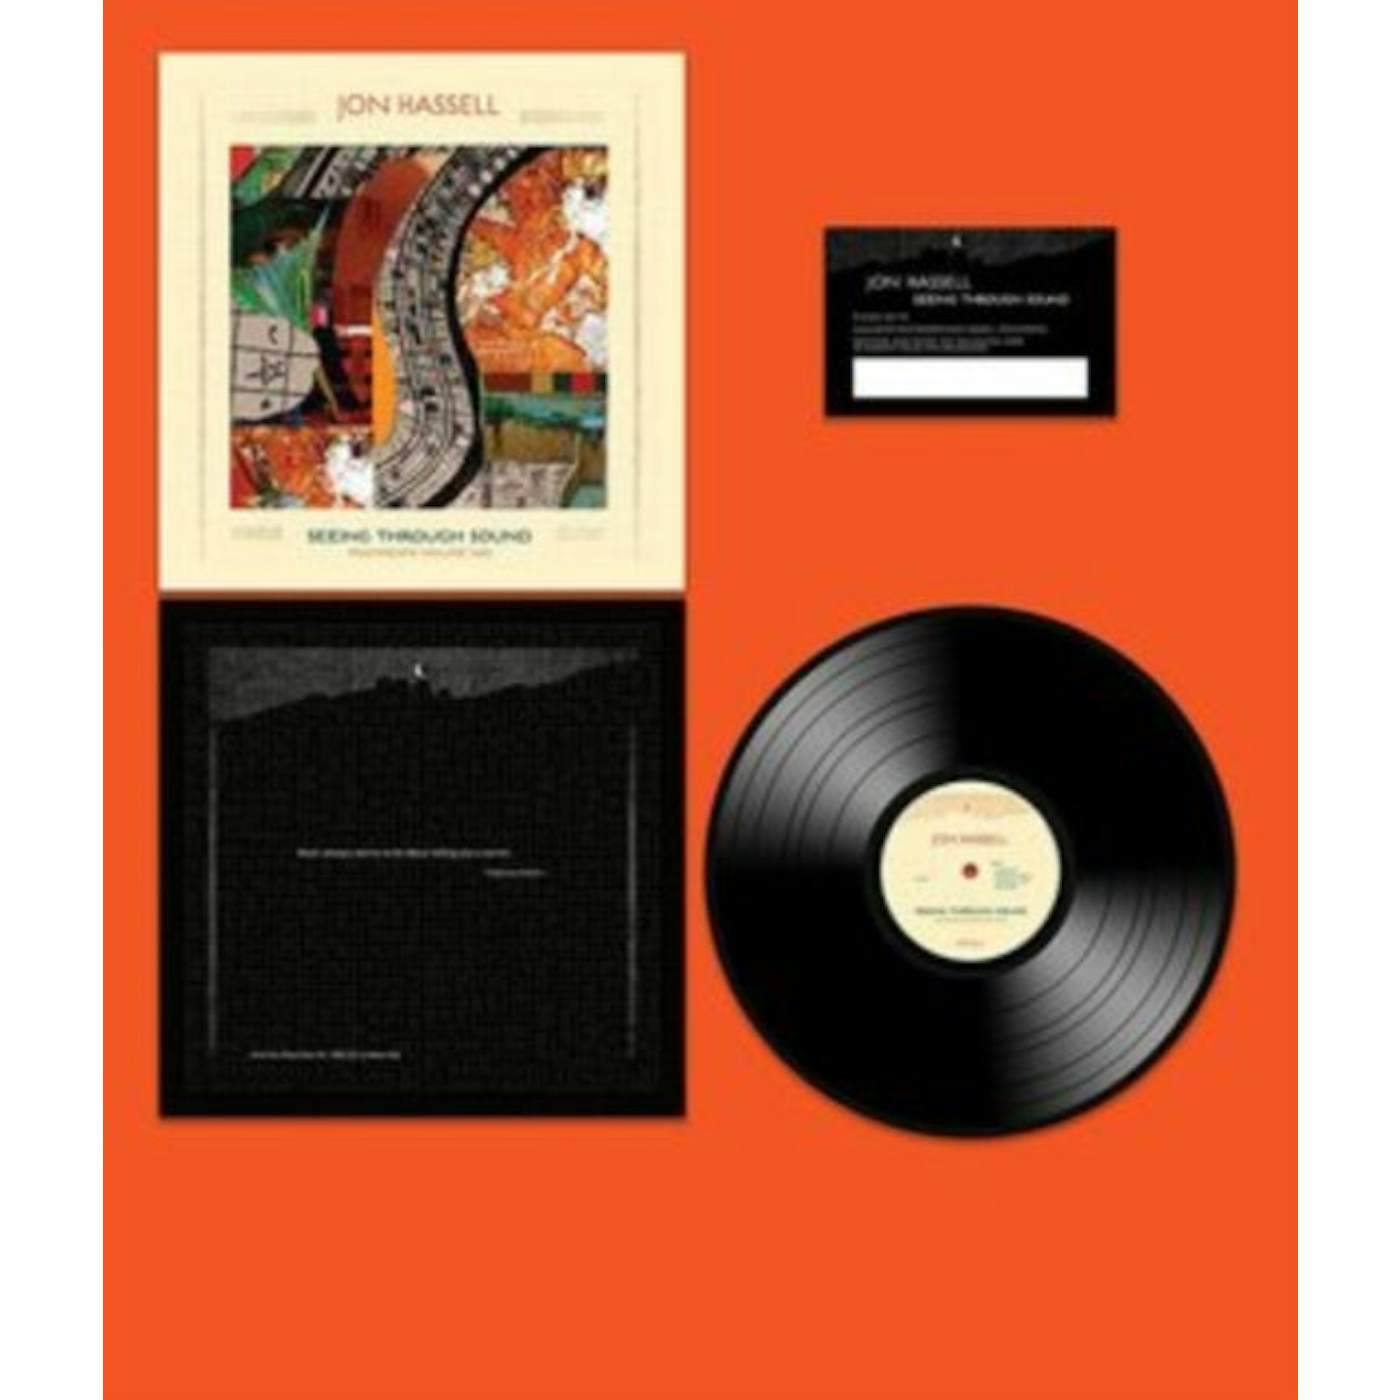 Jon Hassell LP Vinyl Record - Seeing Through Sound (Pentimento Volume Two)